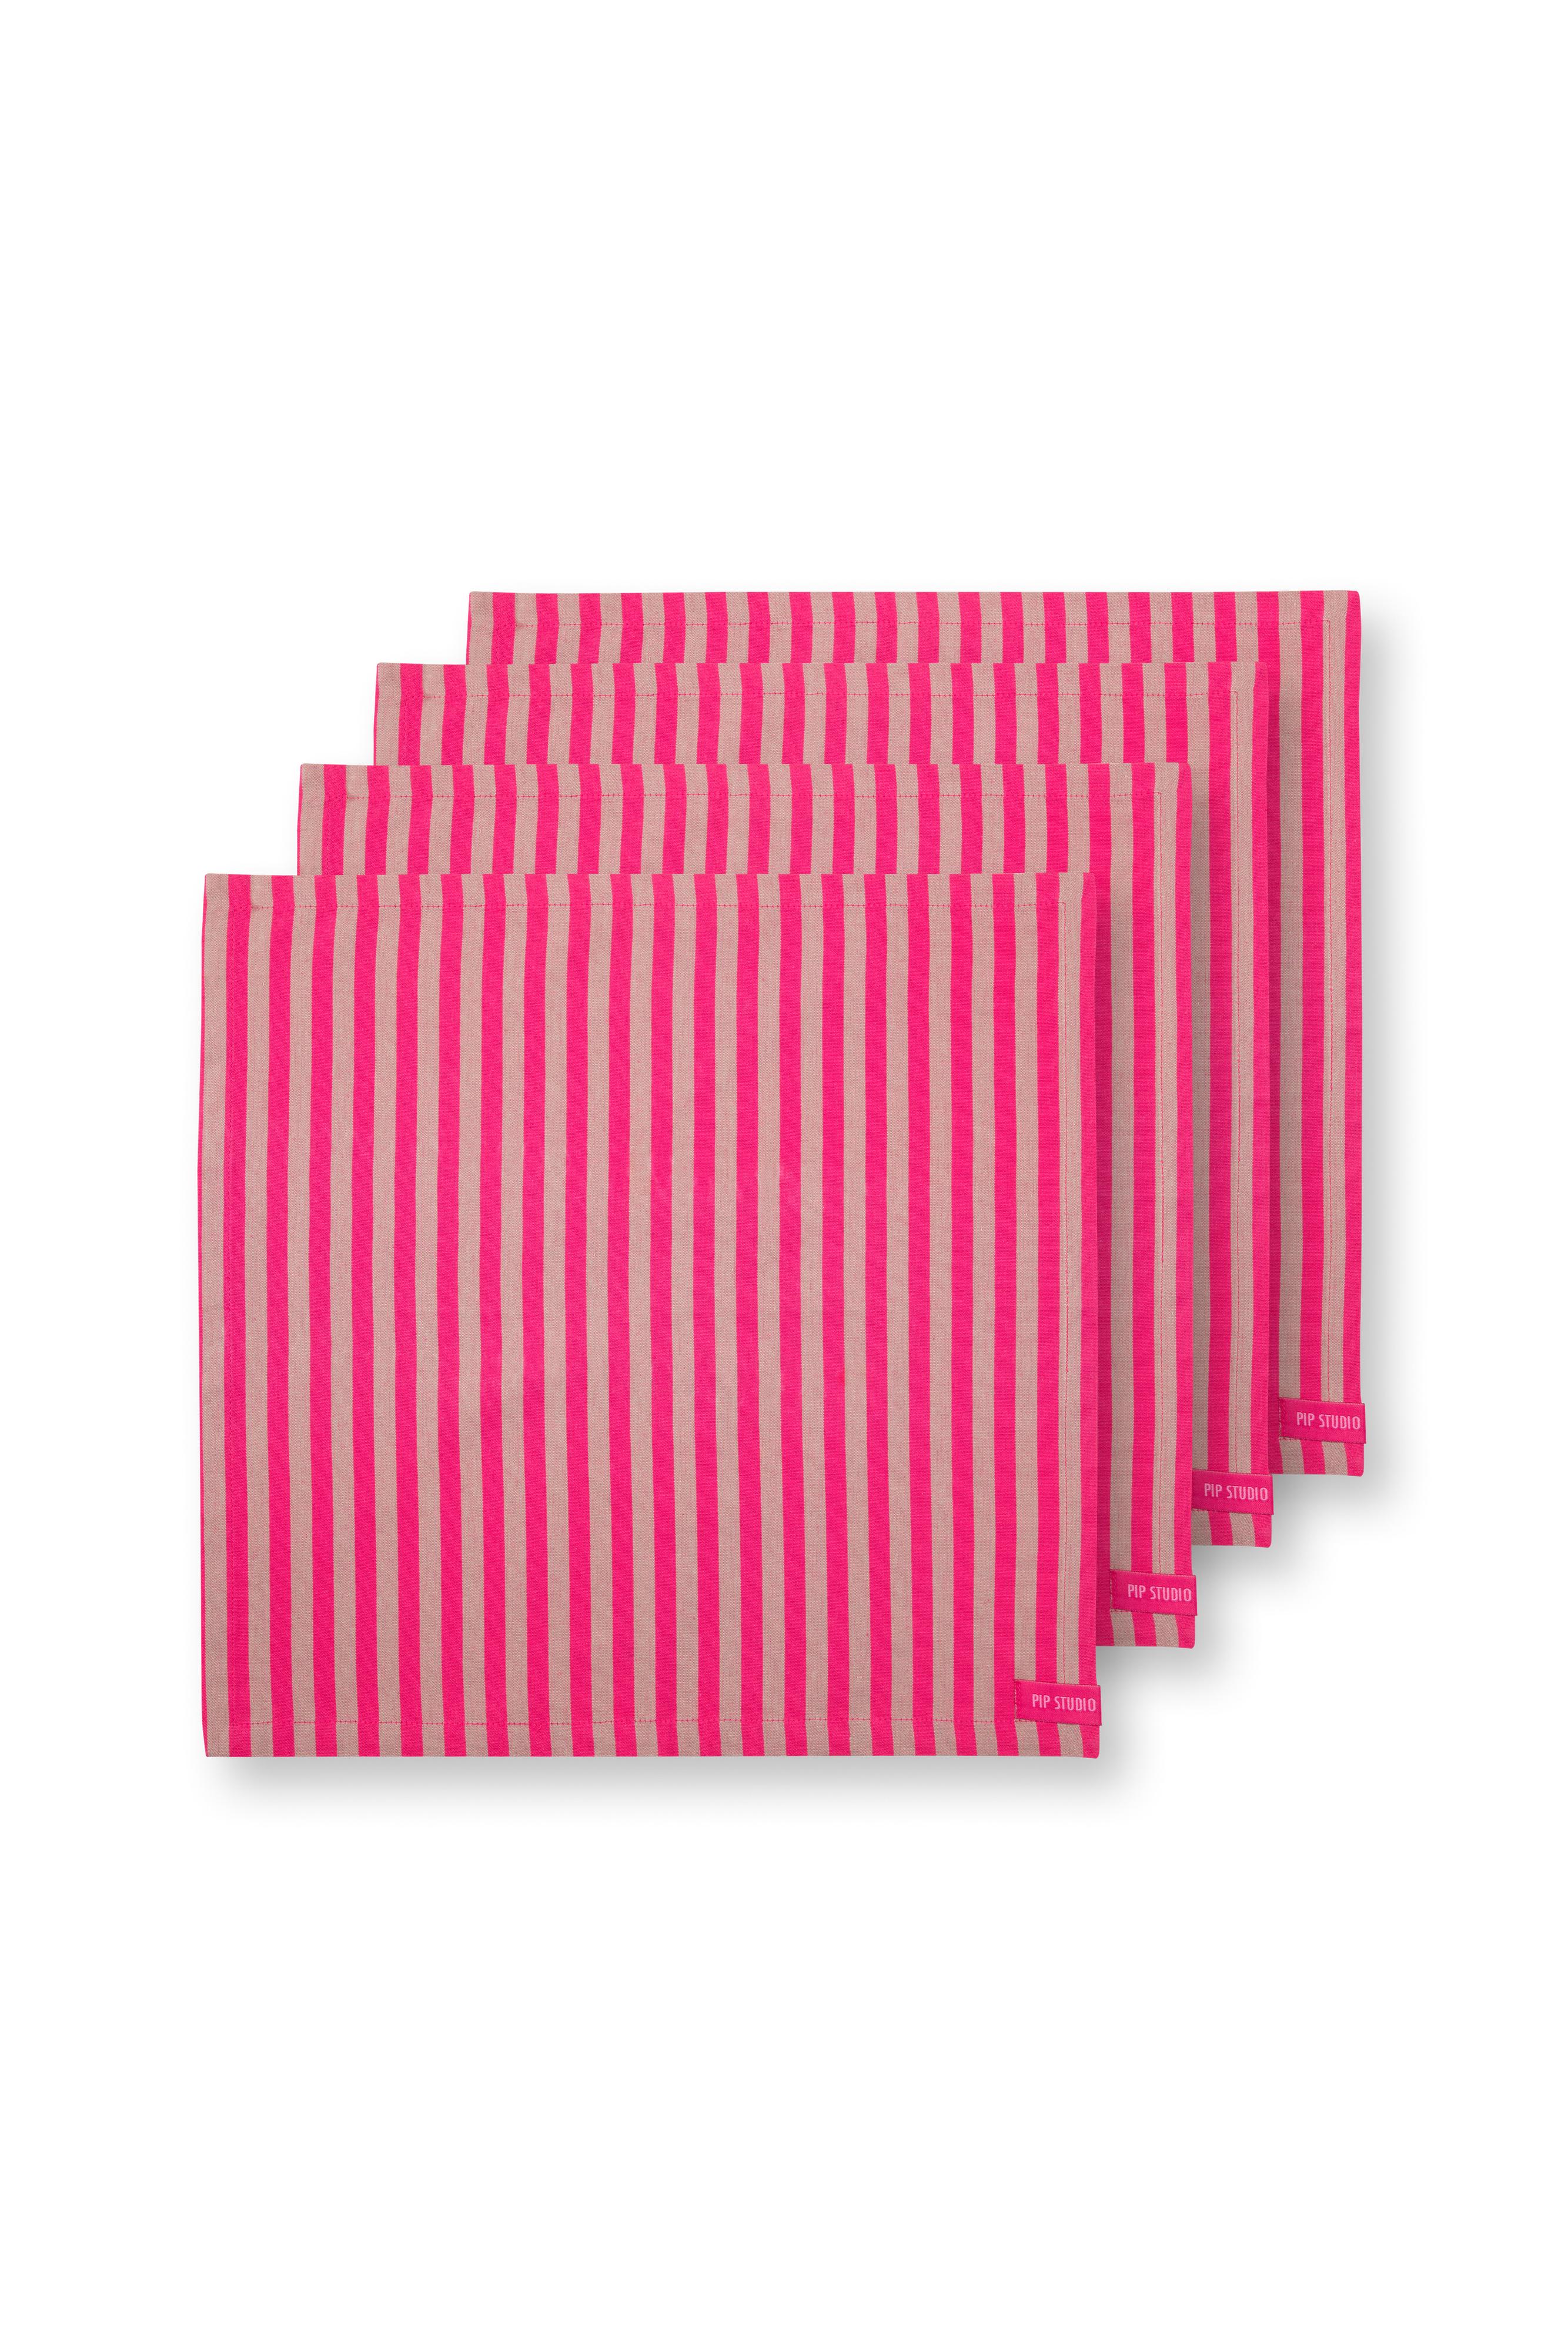 Set/4 Napkins Stripes Pink 40x40cm Gift